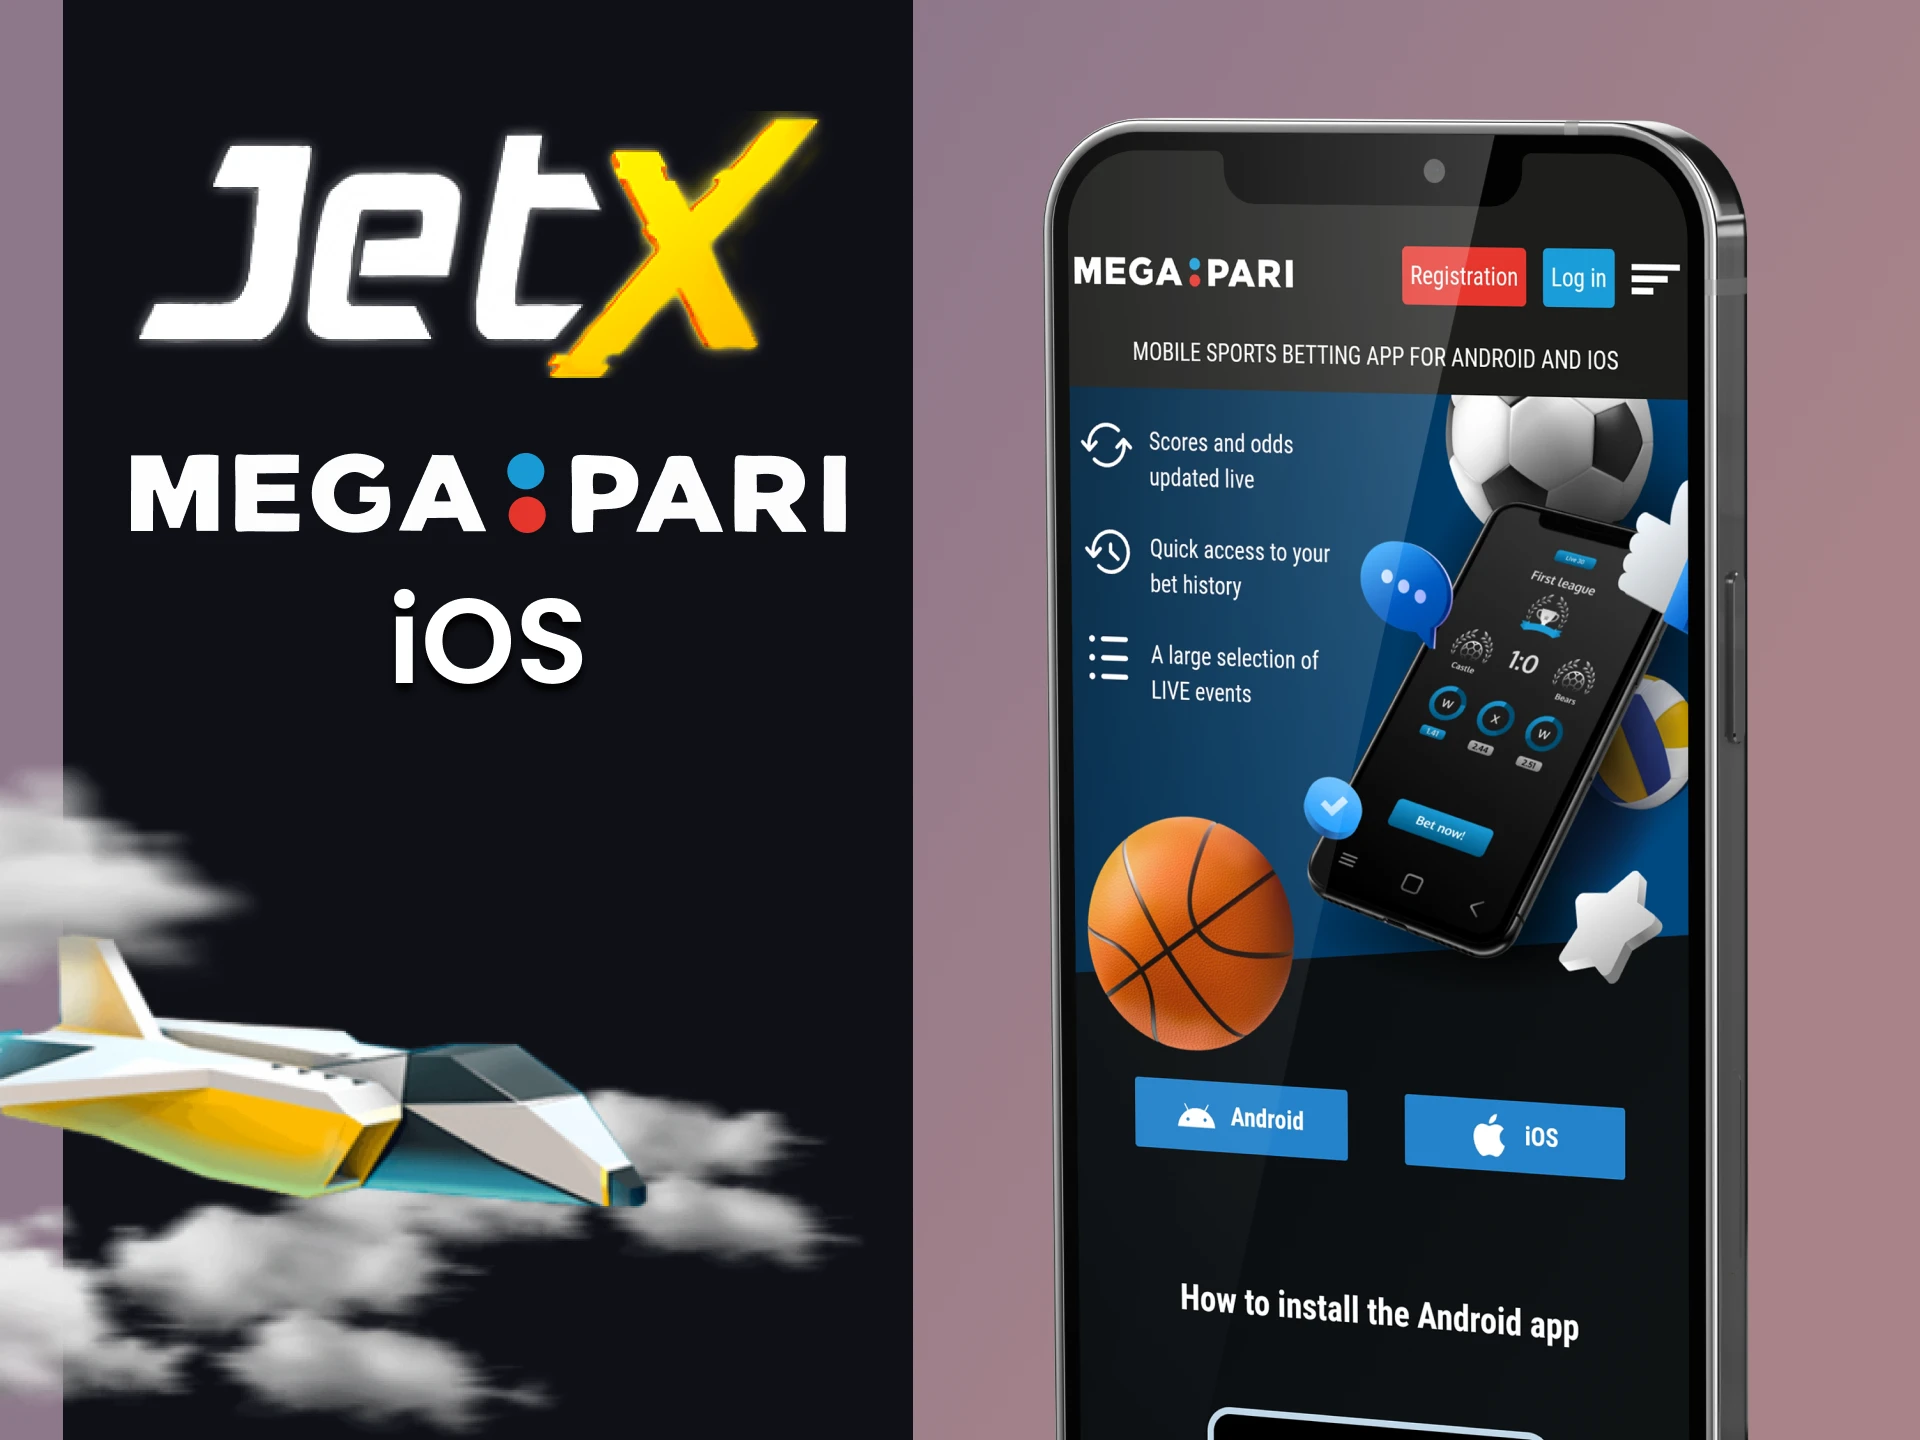 Install the MegaPari app on iOS to play JetX.